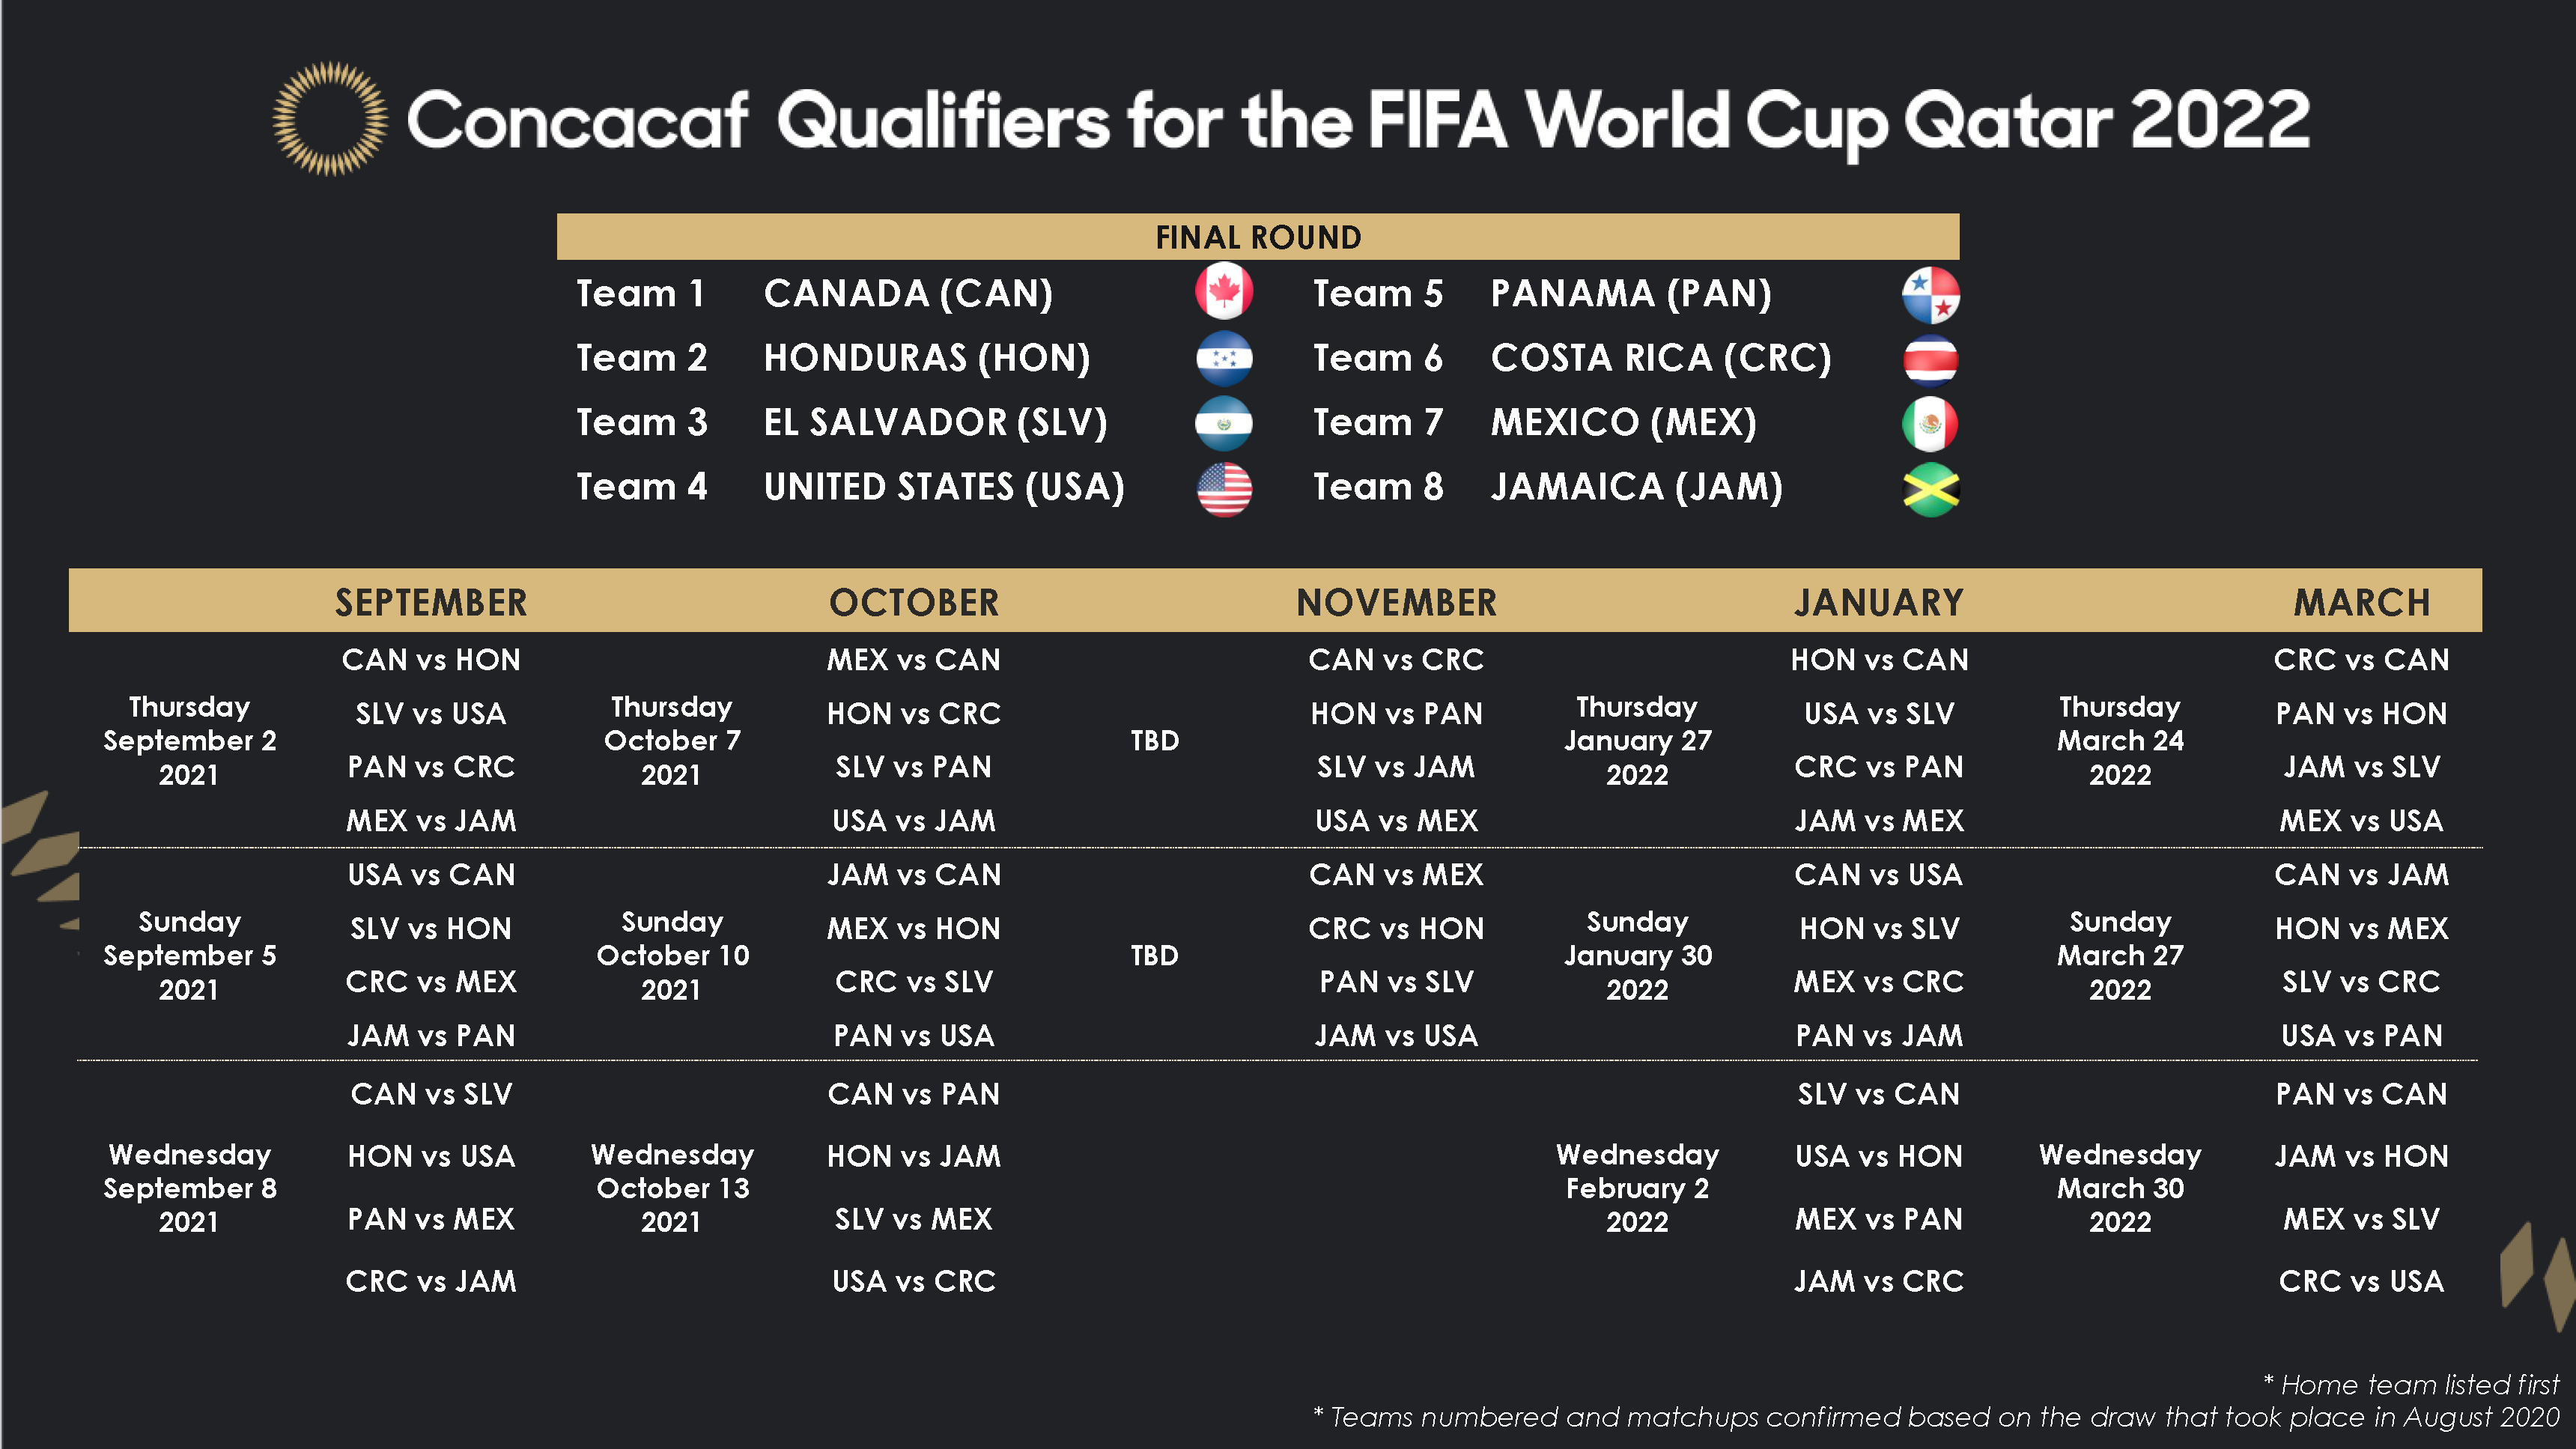 E3 2022 Calendar Concacaf On Twitter: "Here Is The Final Round Calendar For The Concacaf  Qualifiers For The Fifa World Cup Qatar 2022👇 🗓️ Reserva Las Fechas, El  Calendario De Las Clasificatorias De Concacaf Para